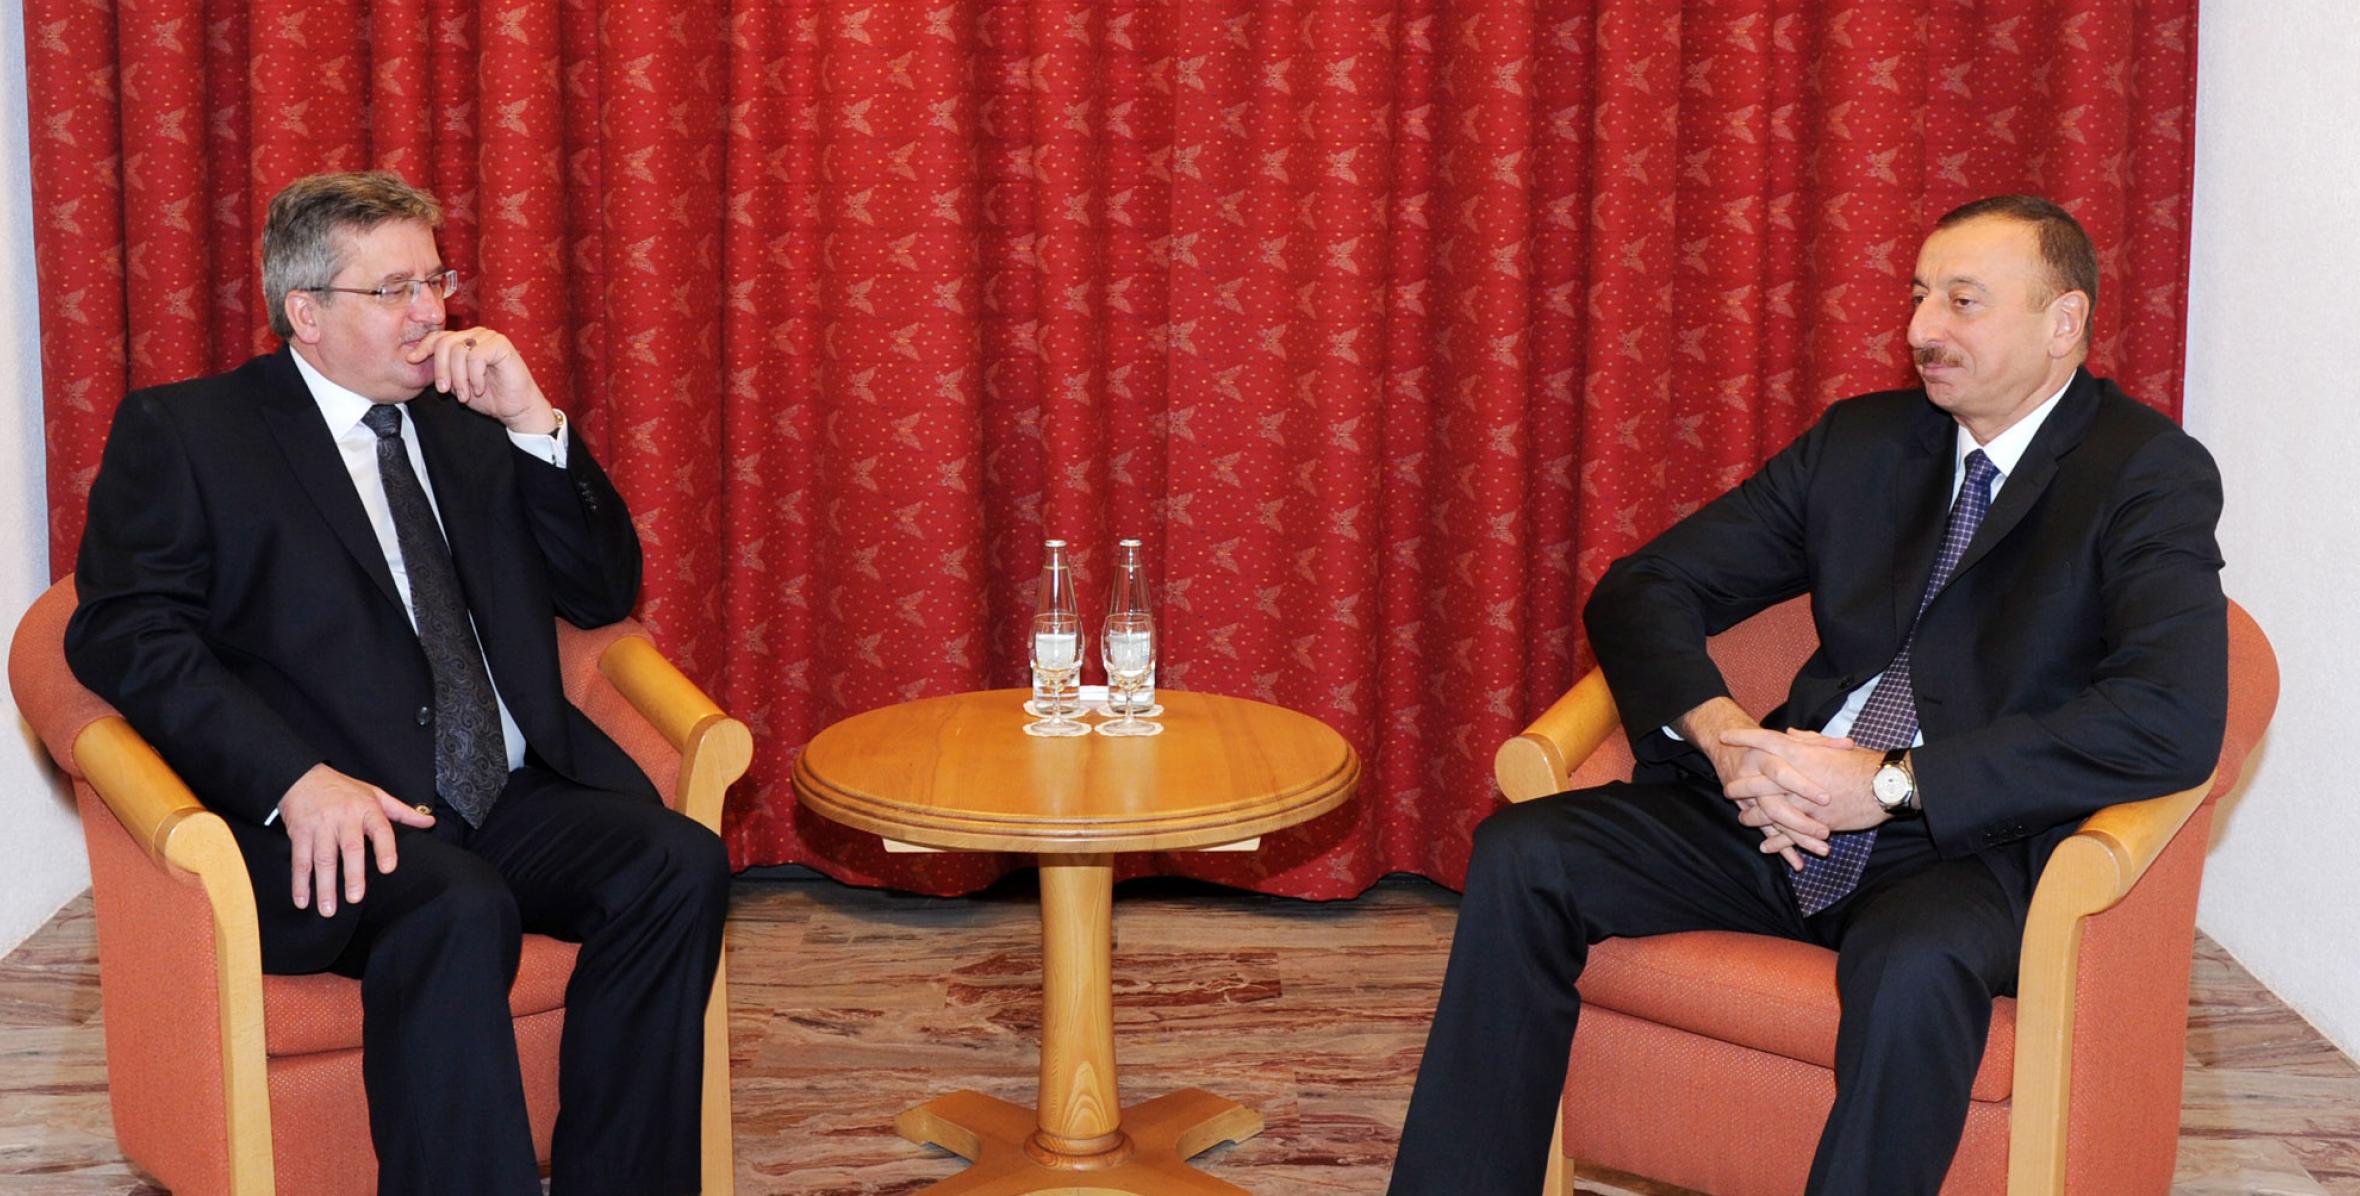 Ilham Aliyev met with President of the Republic of Poland Bronislaw Komorowski